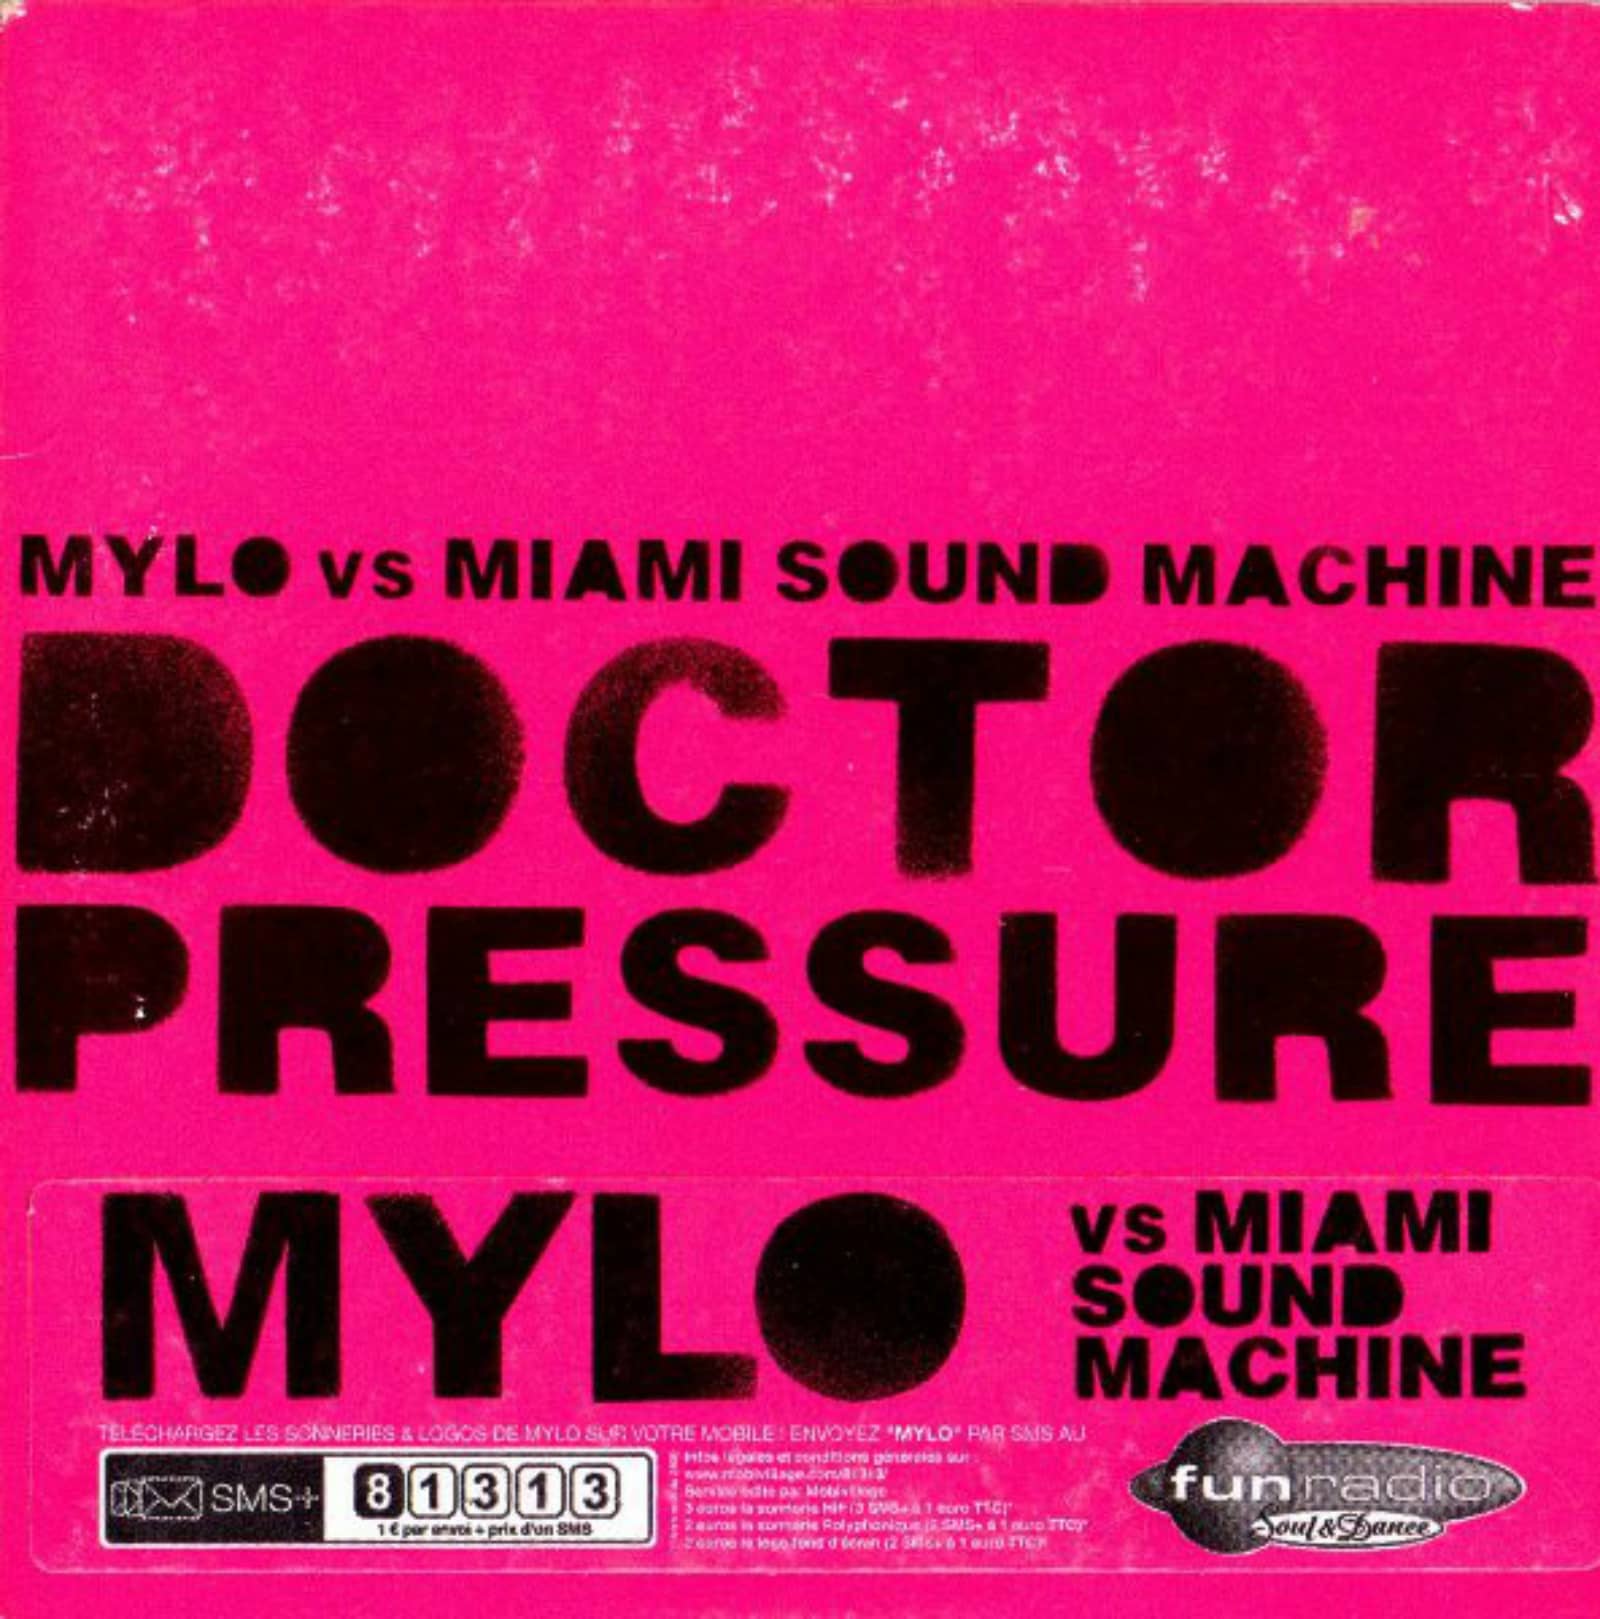 Miami sound machine drop the pressure descaling tablets